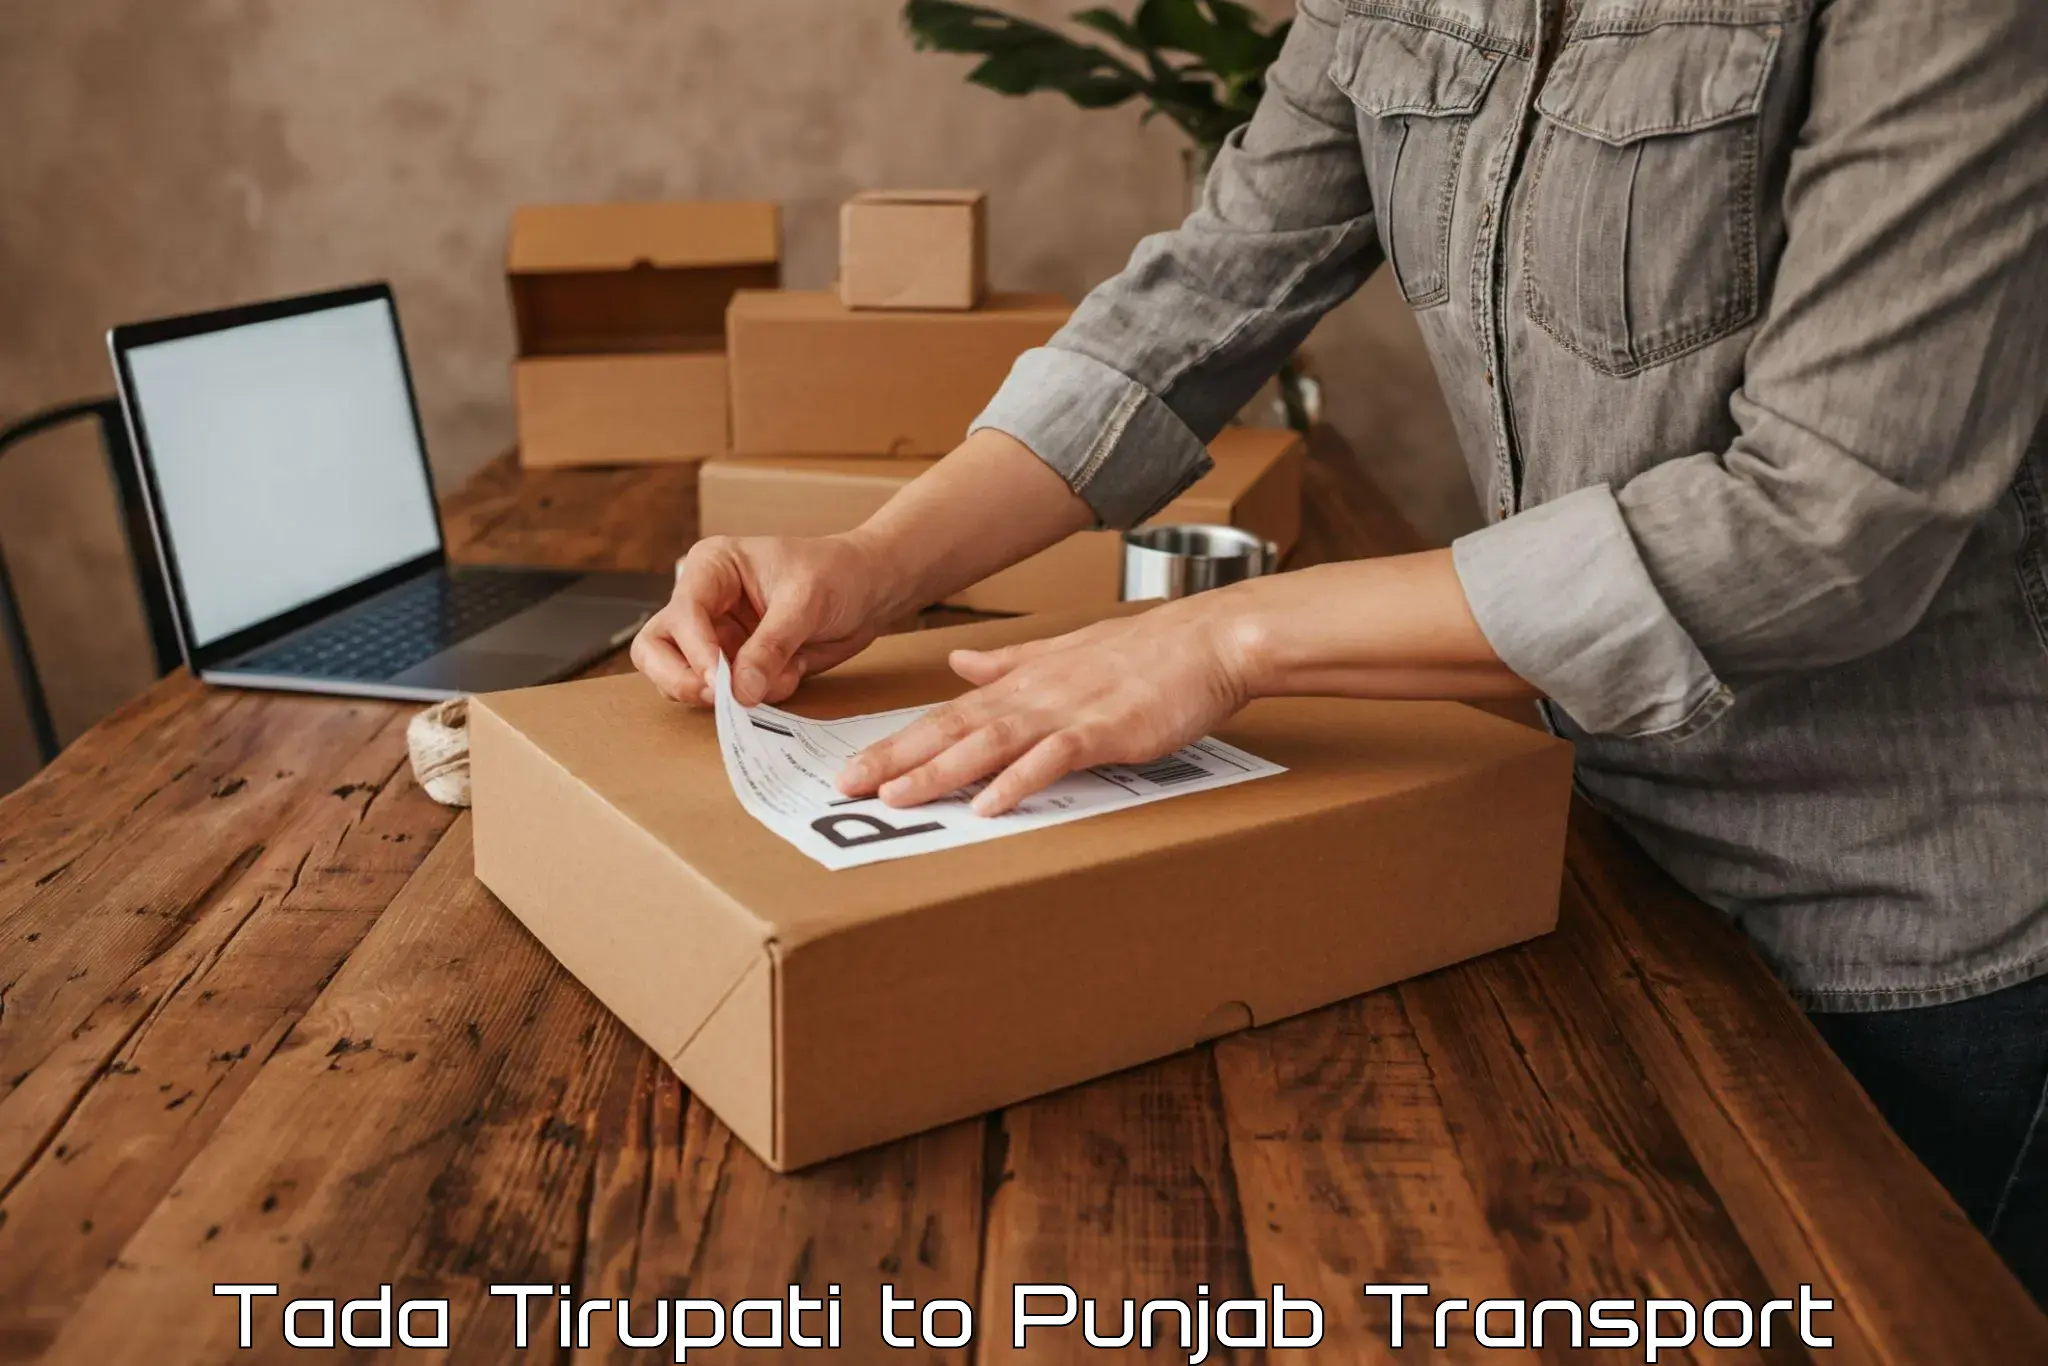 All India transport service Tada Tirupati to Tarsikka